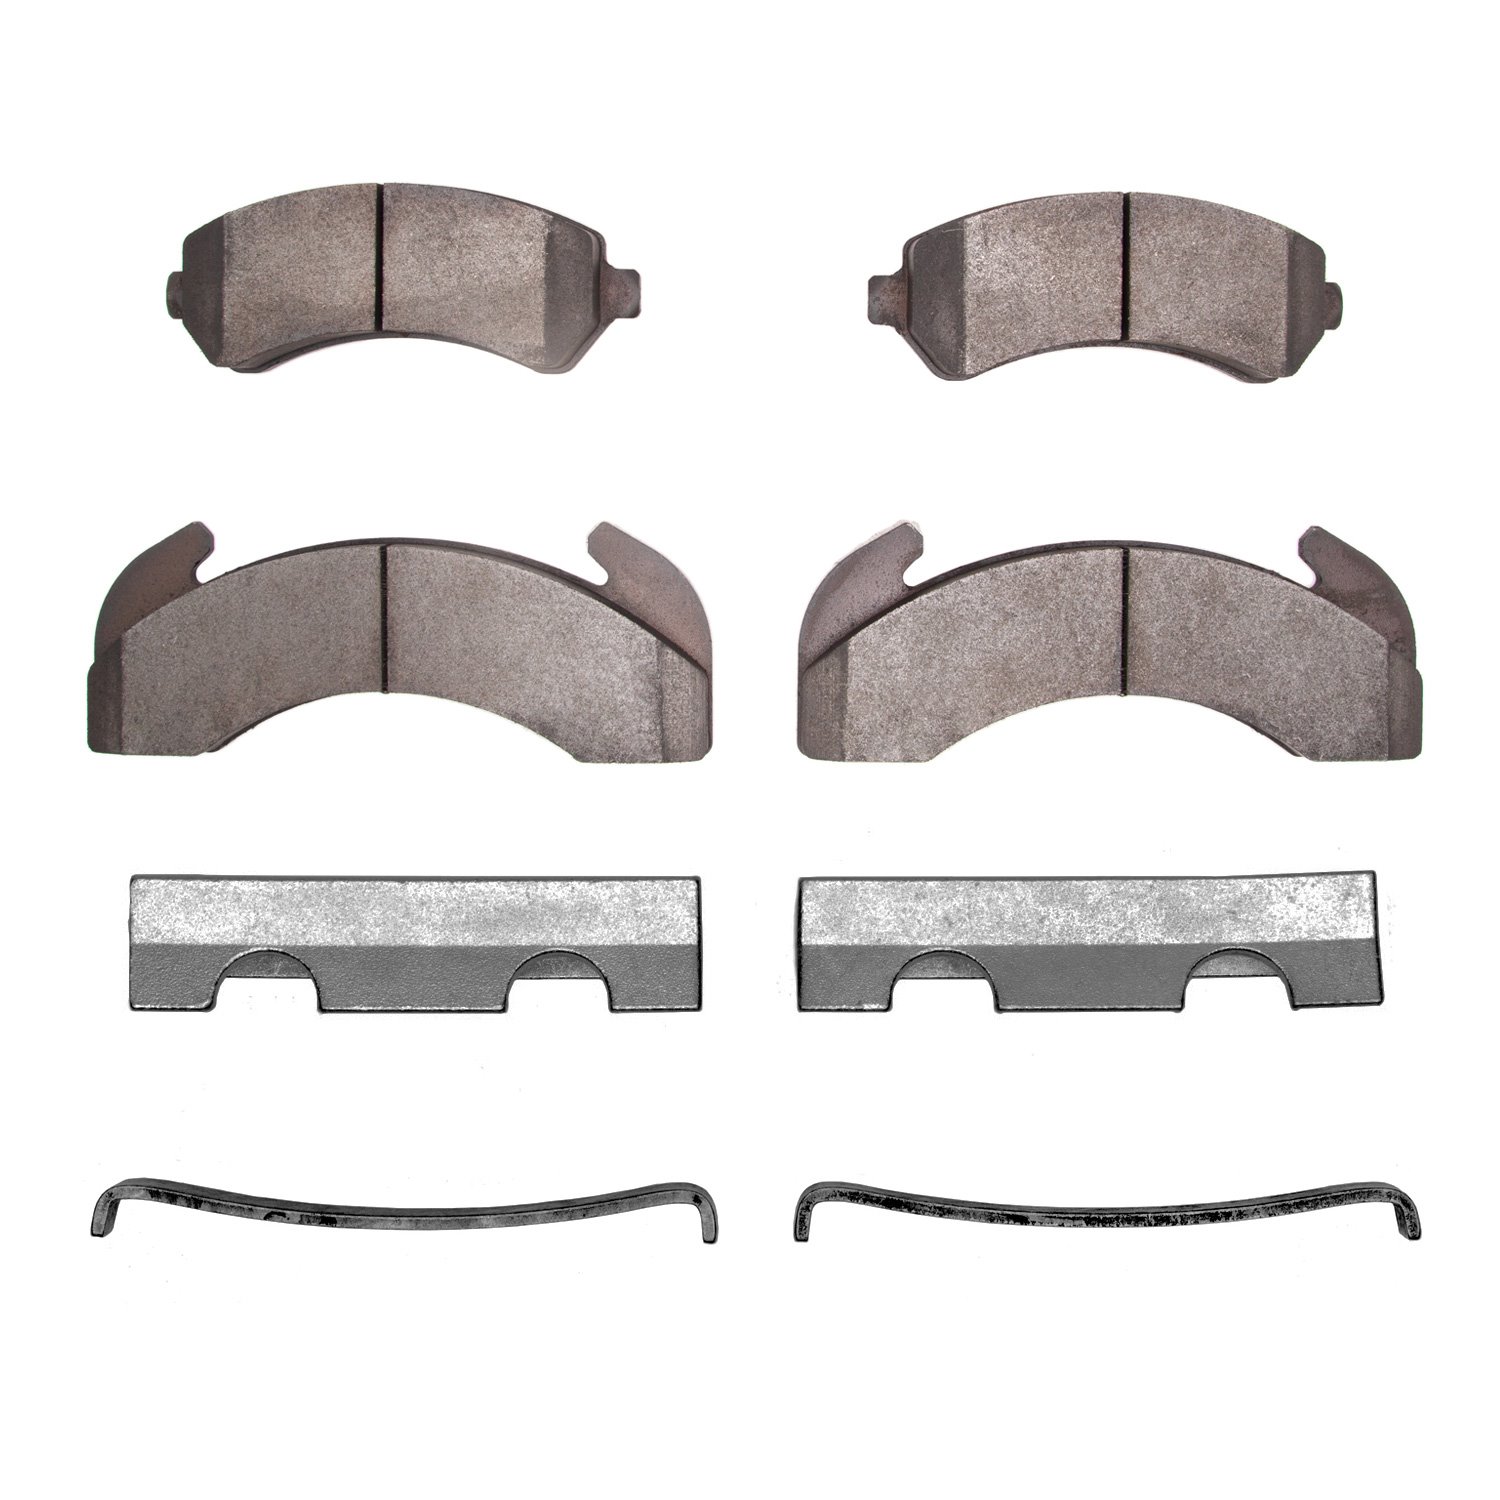 Semi-Metallic Brake Pads & Hardware Kit, 1979-2012 Fits Multiple Makes/Models, Position: Front & Rear